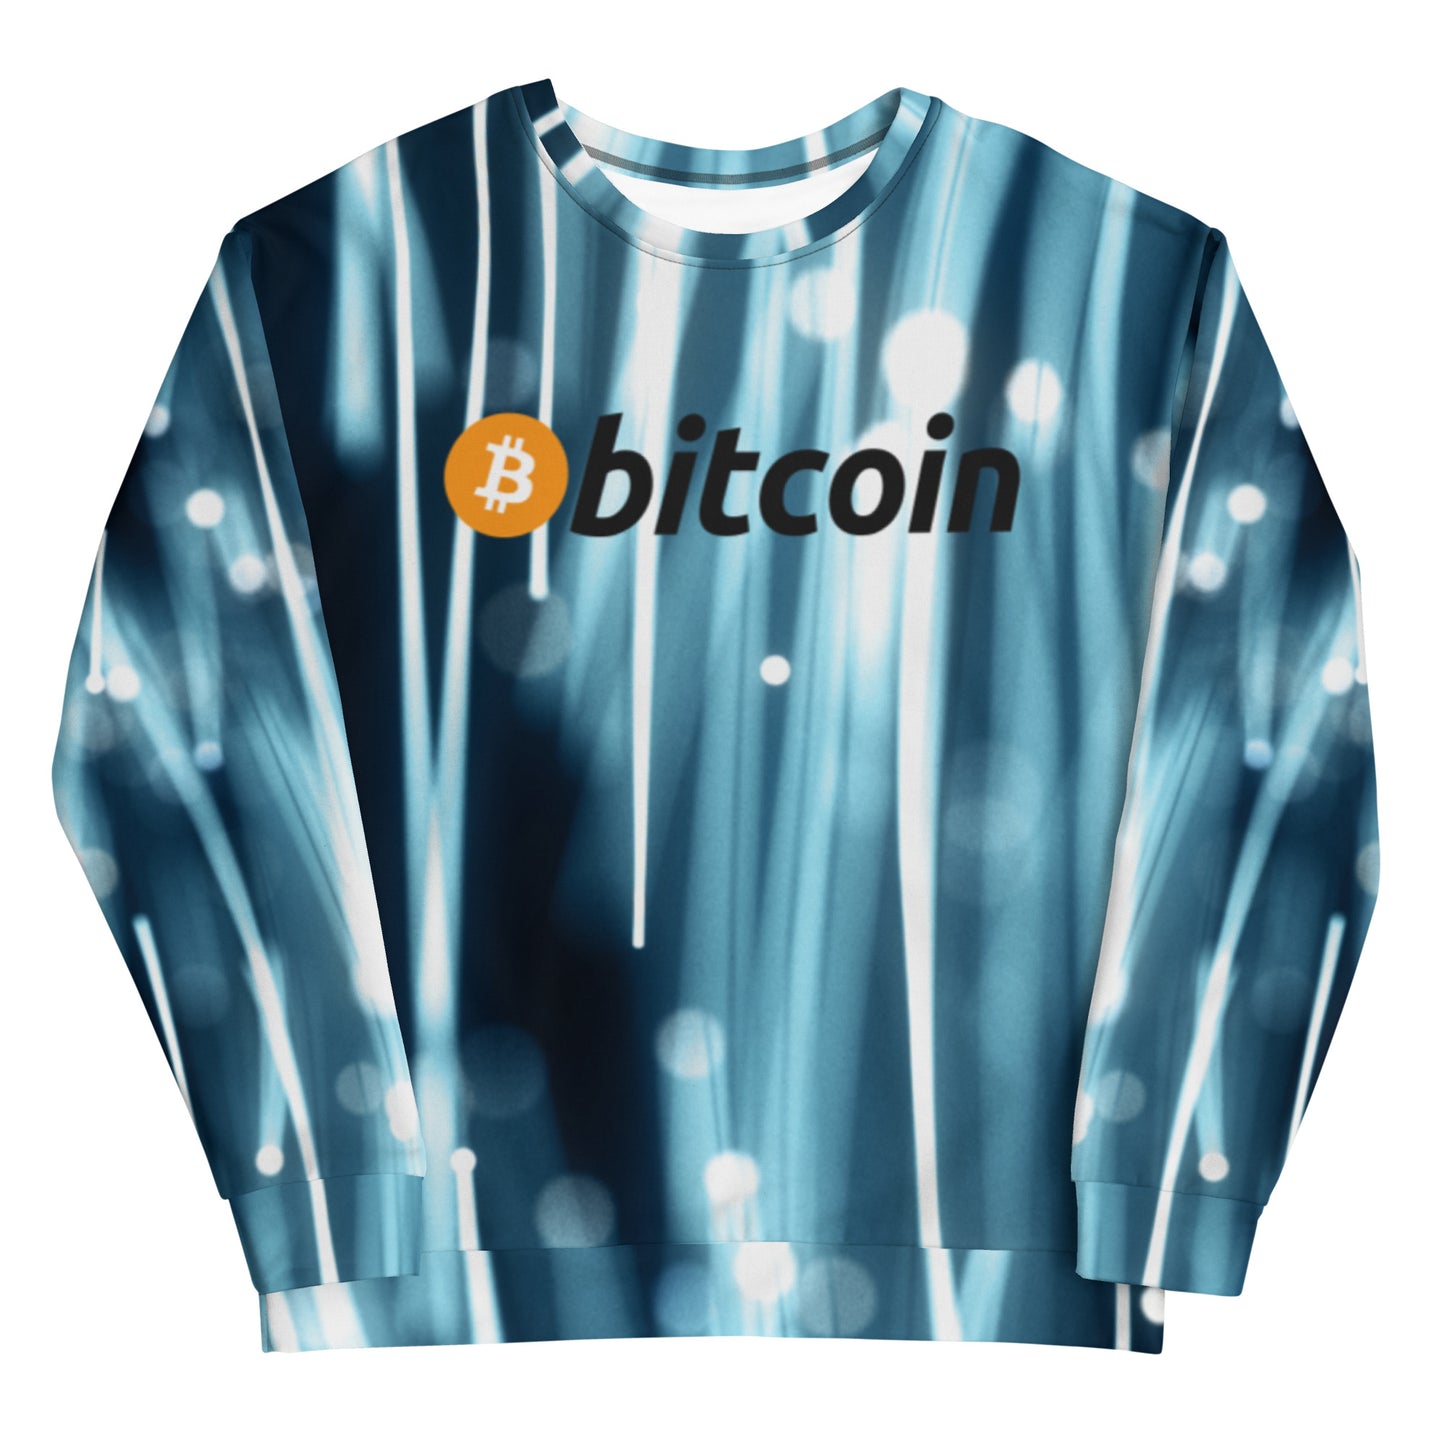 Bitcoin Optics Sweatshirt